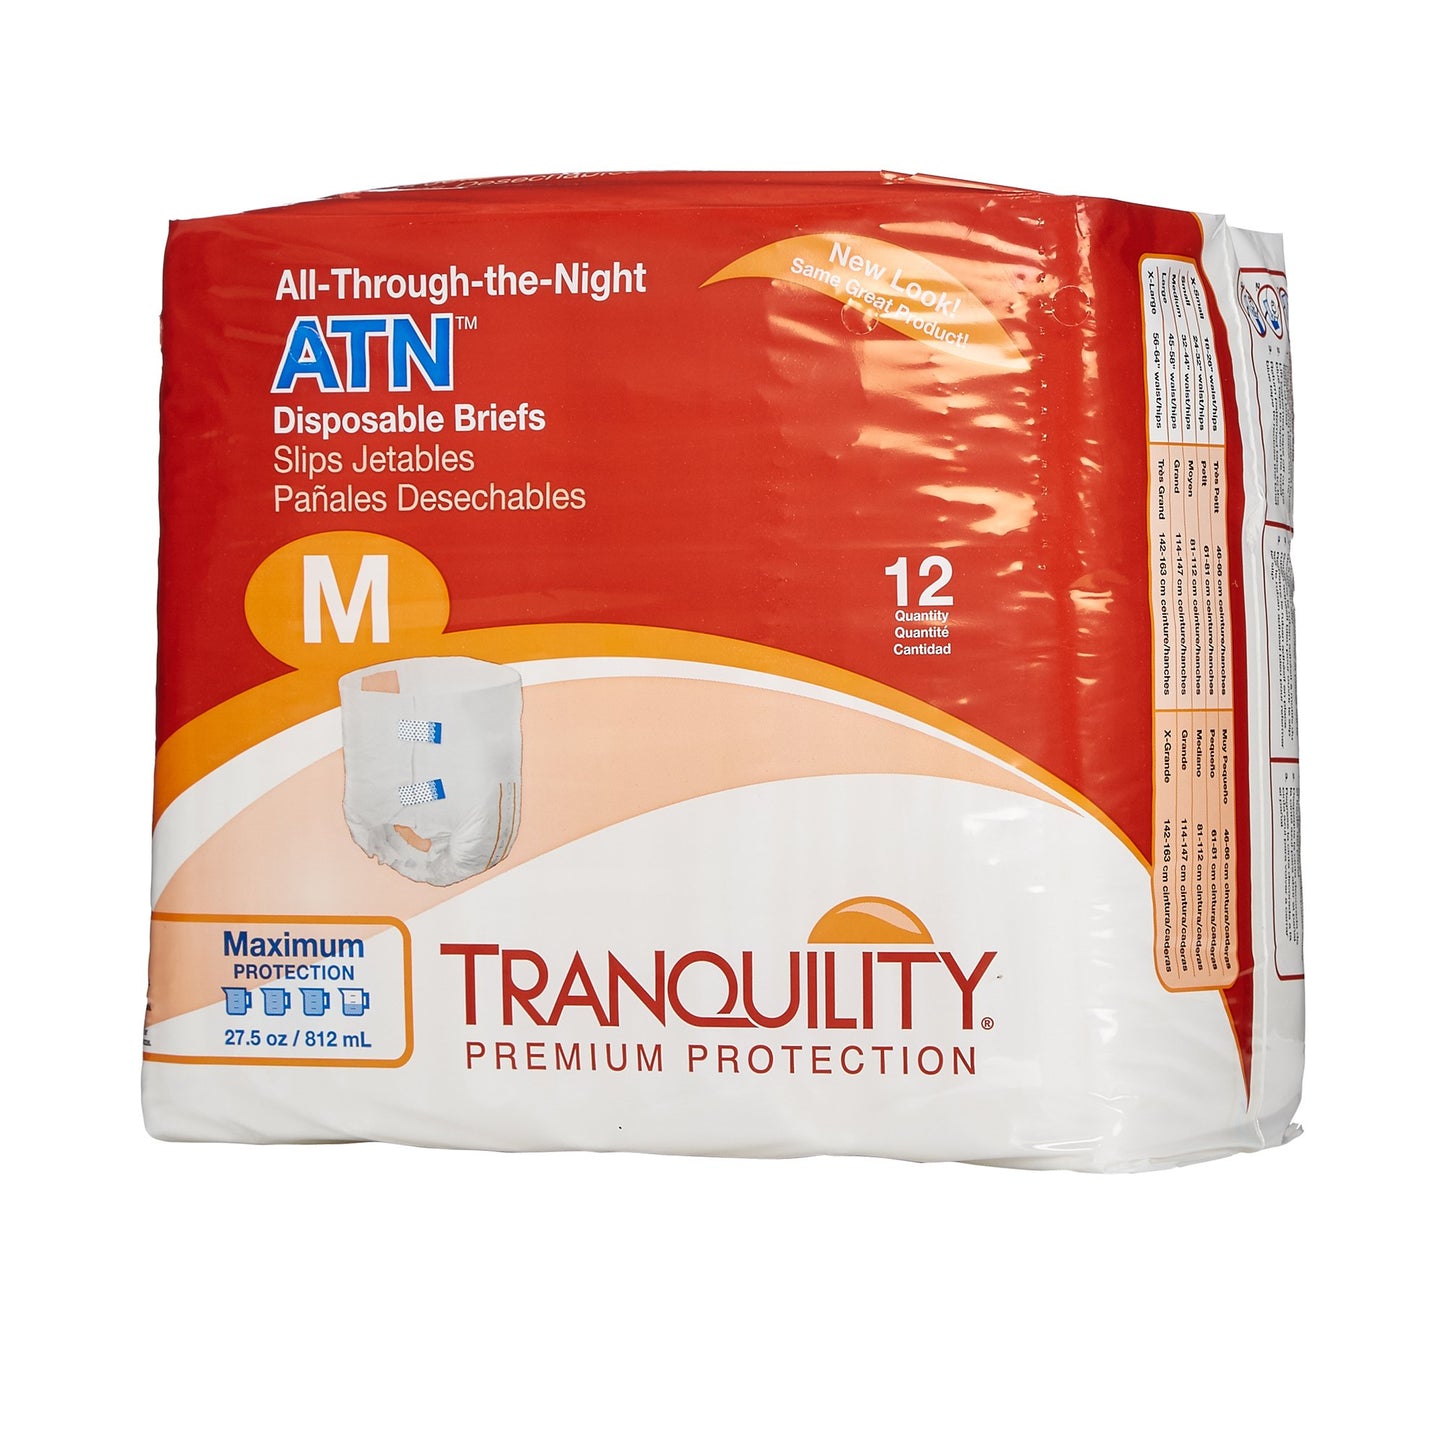 Tranquility® ATN Maximum Protection Incontinence Brief, Medium, 12 ct